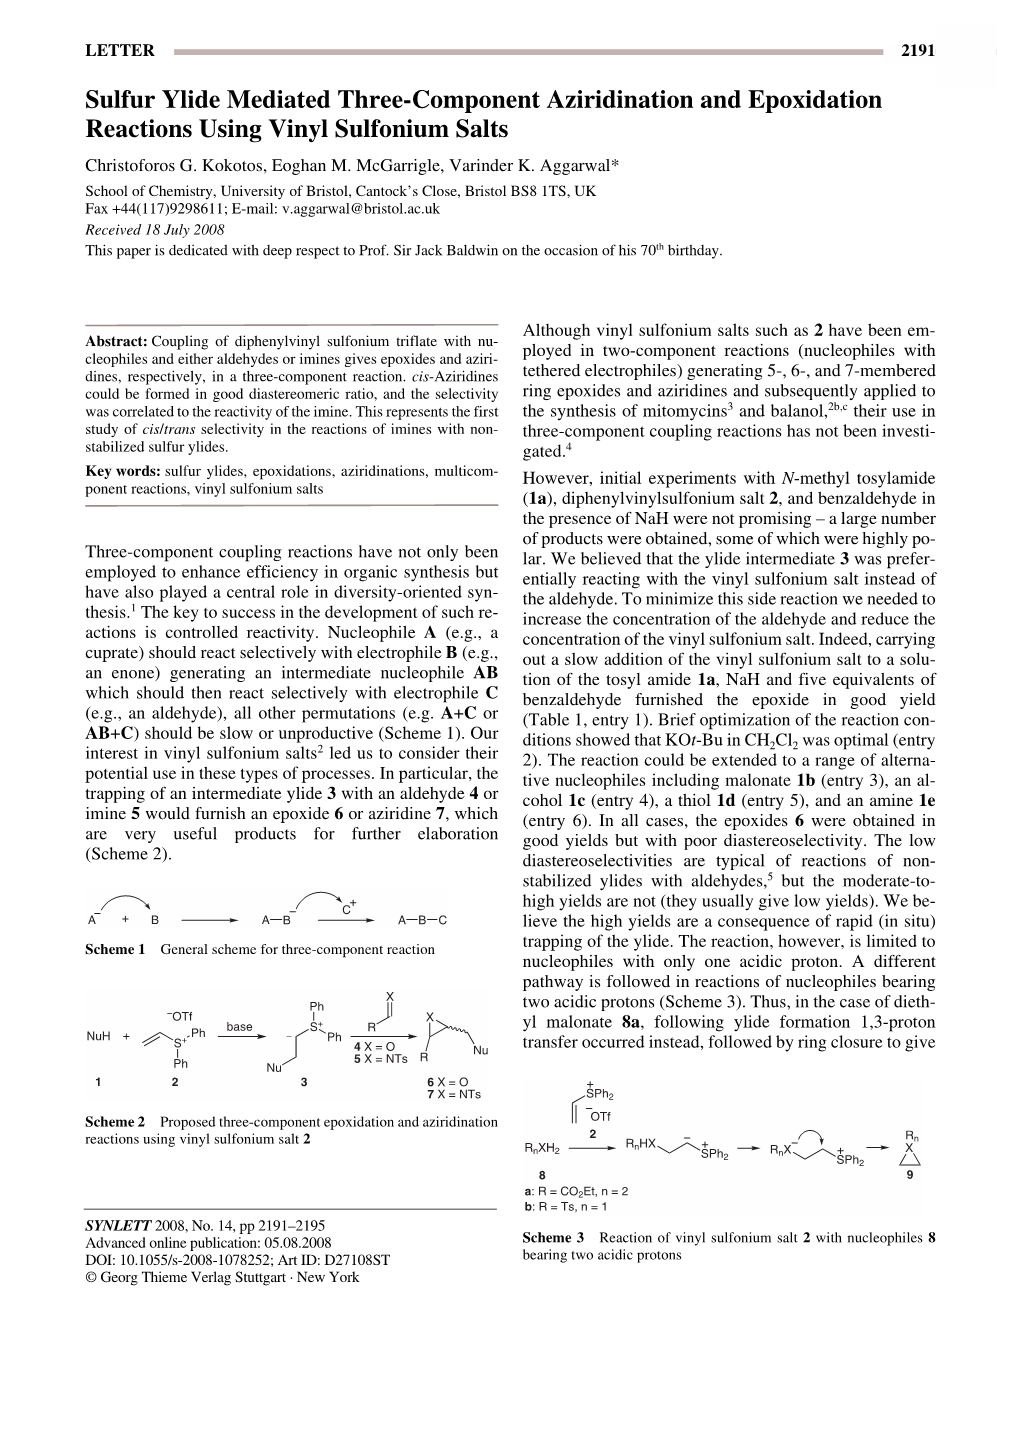 Sulfur Ylide Mediated Three-Component Aziridination and Epoxidation Reactions Using Vinyl Sulfonium Salts